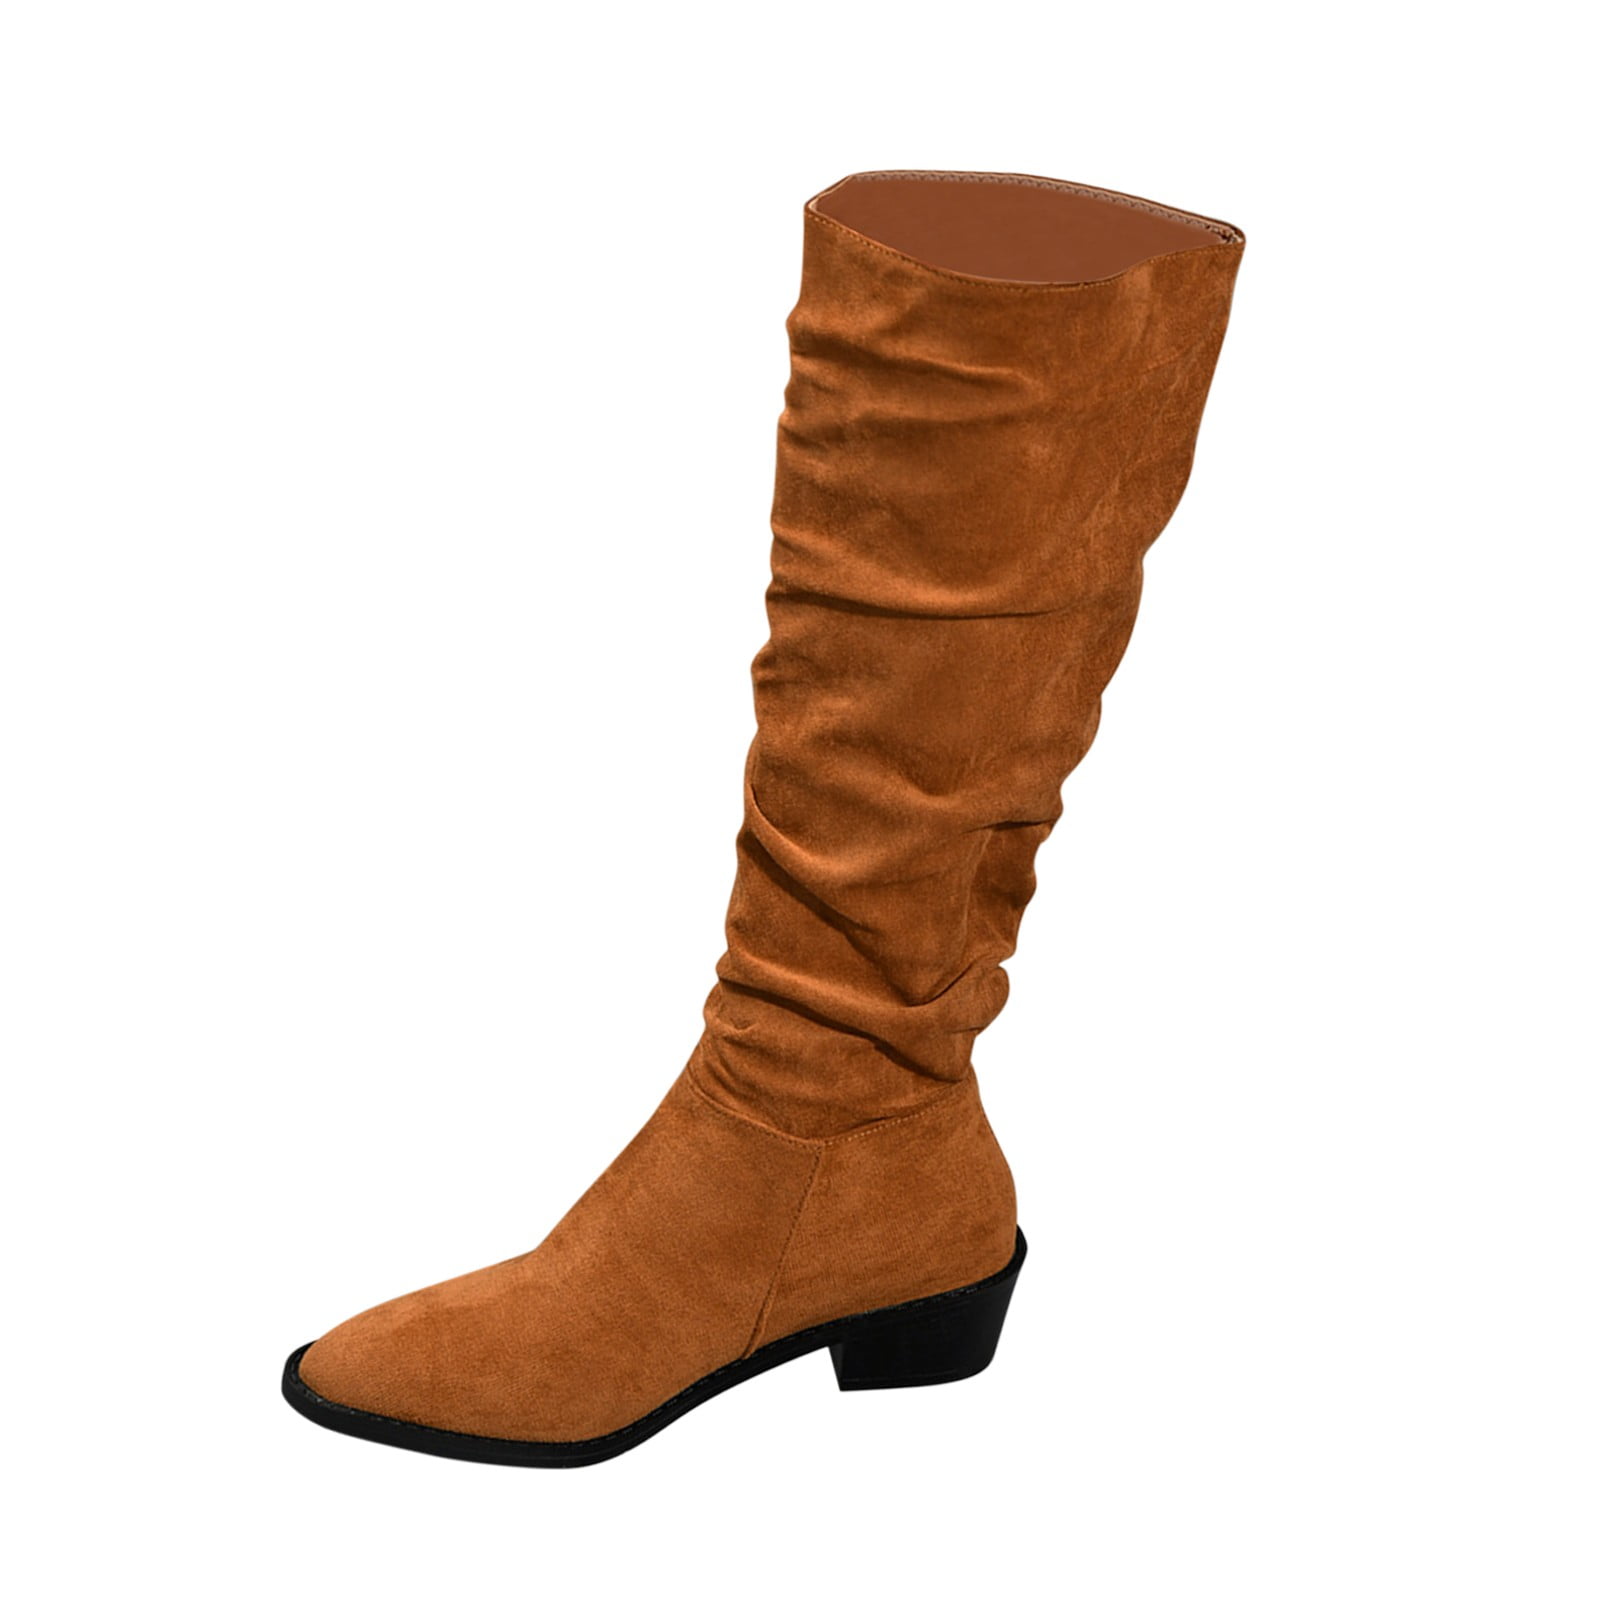 Low Platform Heel Tall Boots | Platform heels, Tall boots, Boots